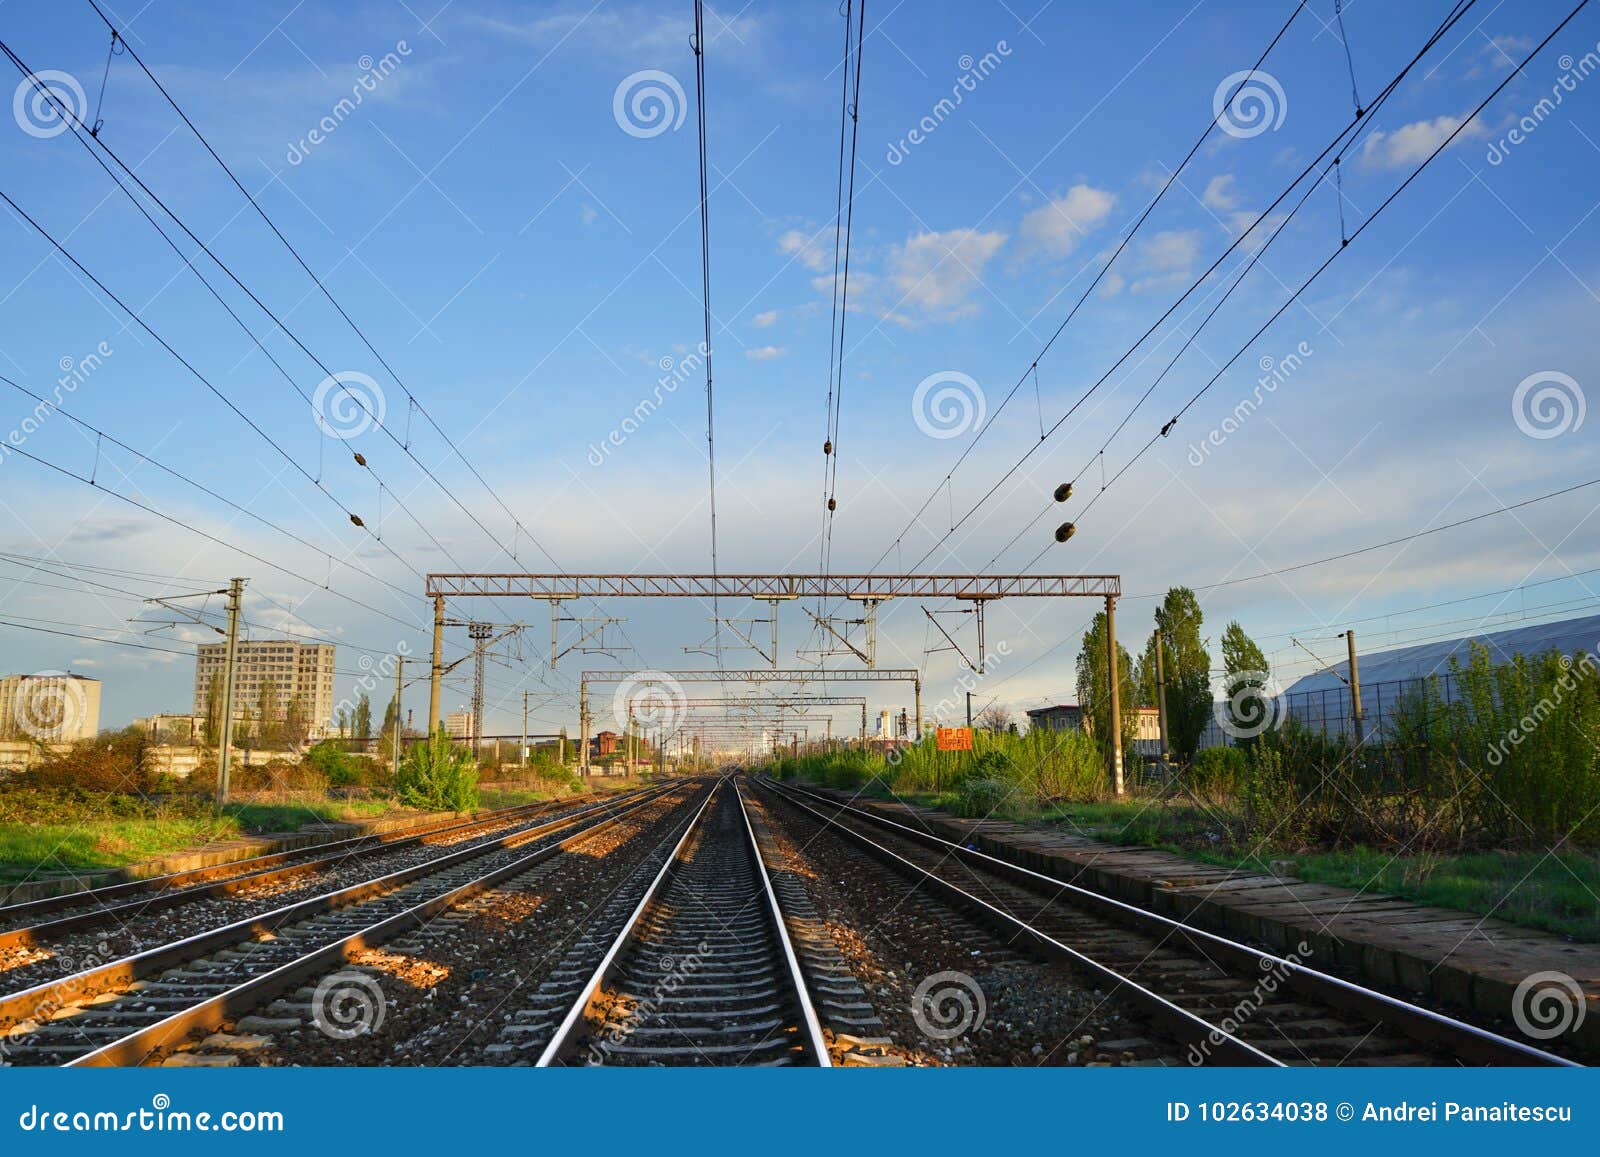 blue sky and rails